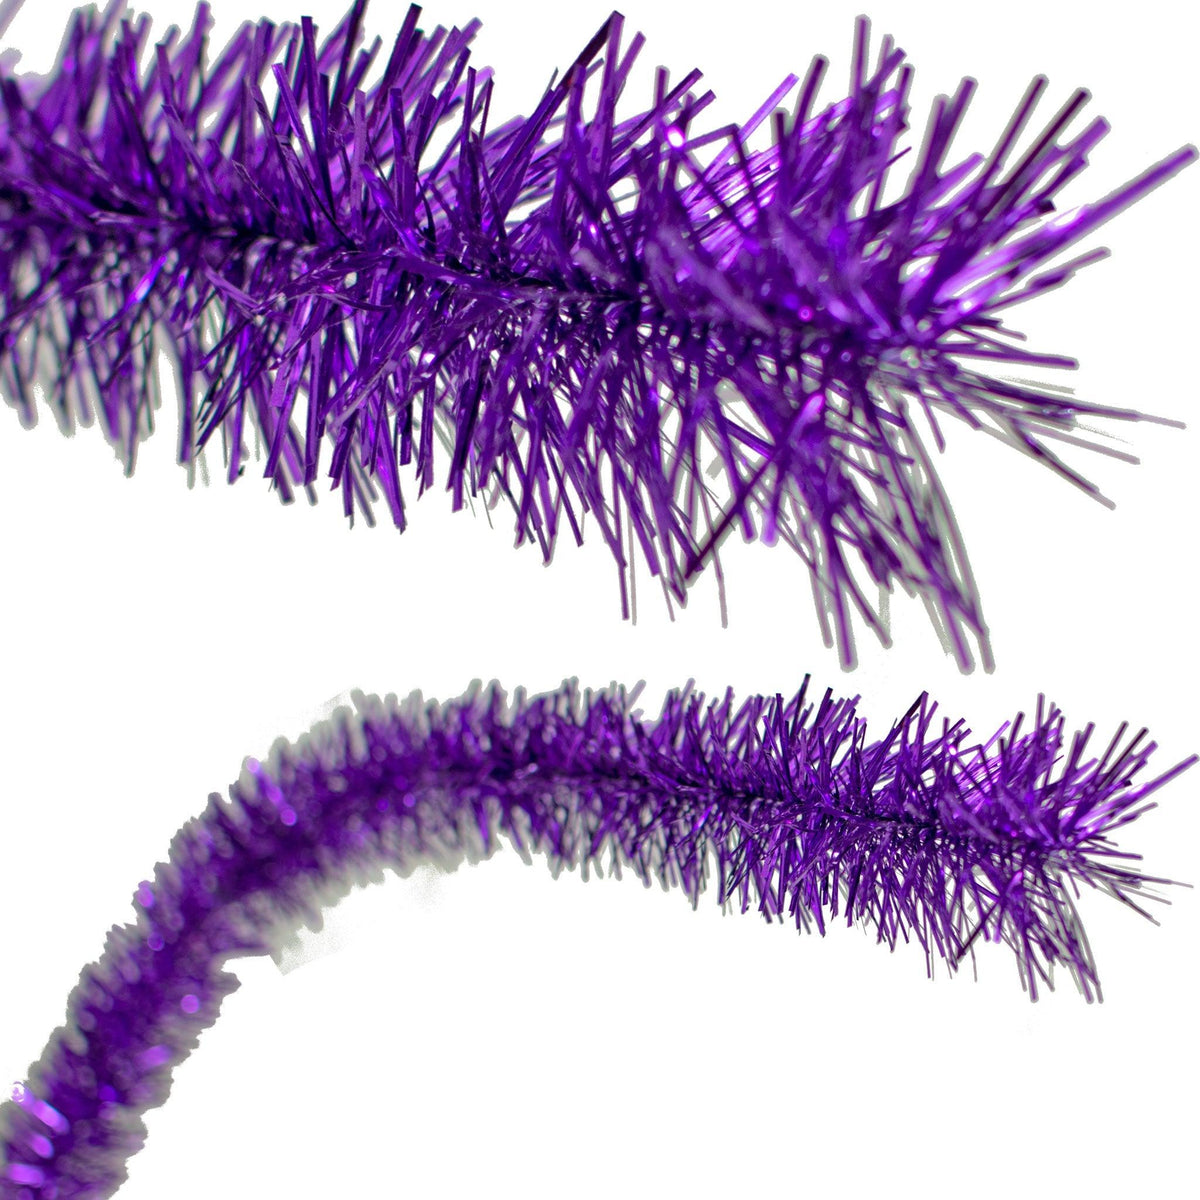 Lee Display's brand new 25ft Shiny Metallic Purple Tinsel Garlands and Fringe Embellishments on sale now at leedisplay.com